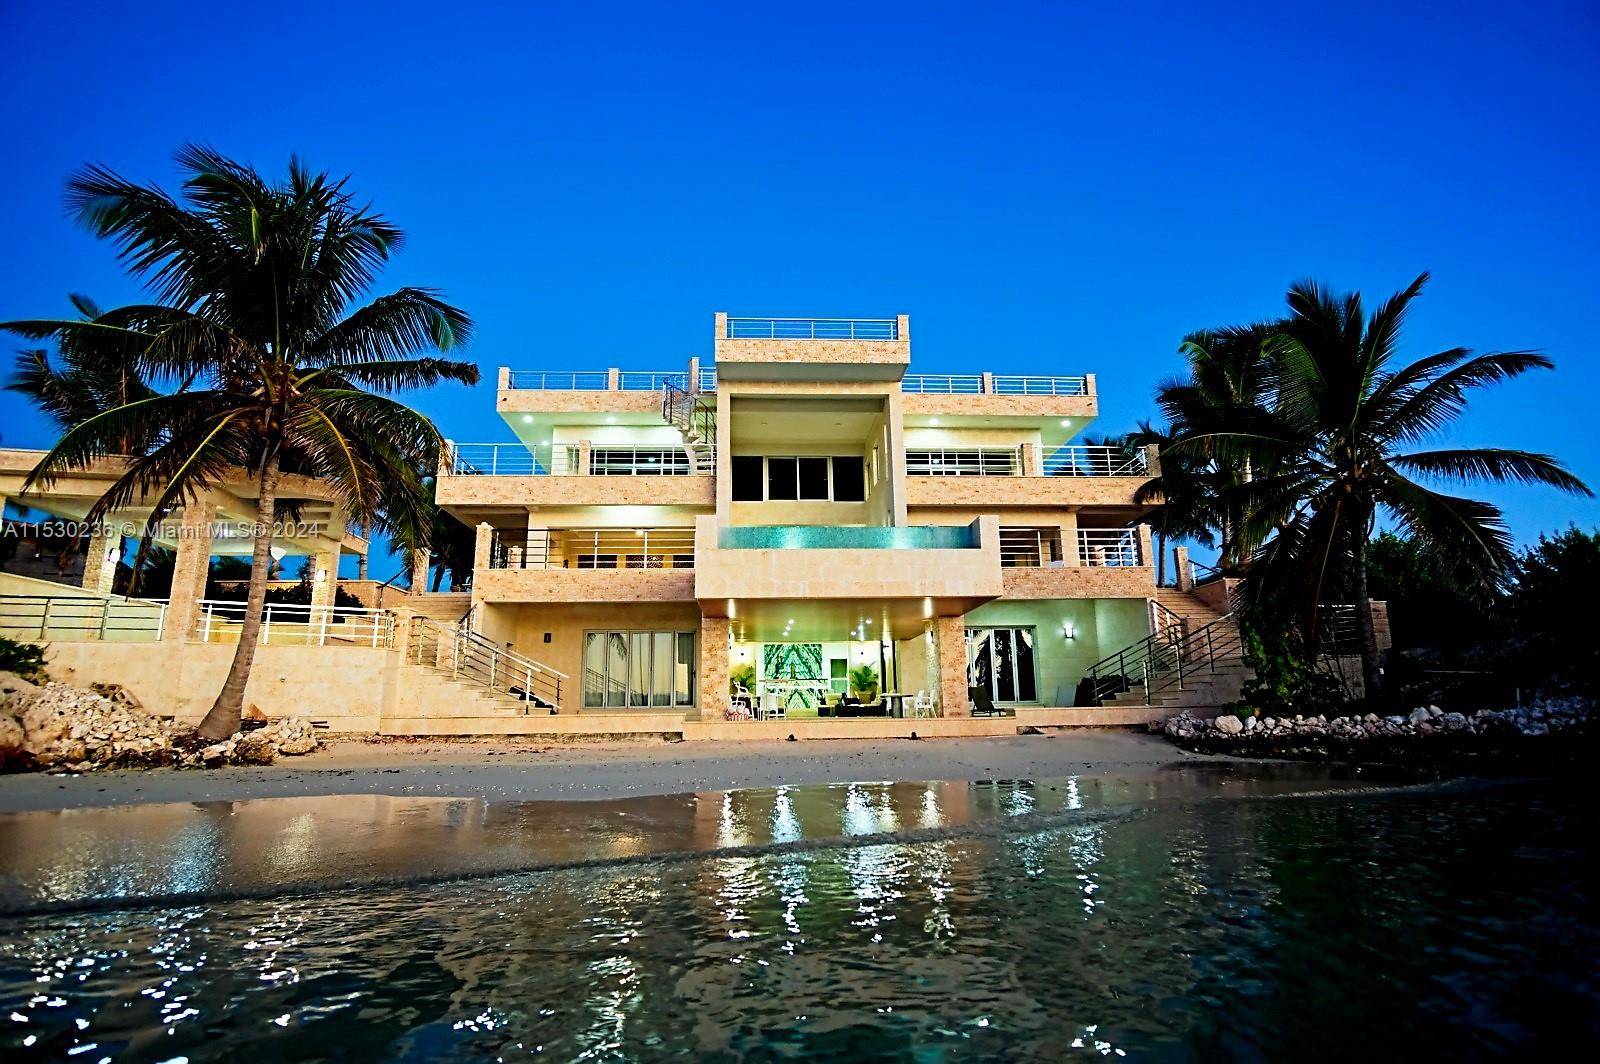 Villa Luxor is a private beach luxury property located in Cap Cana.